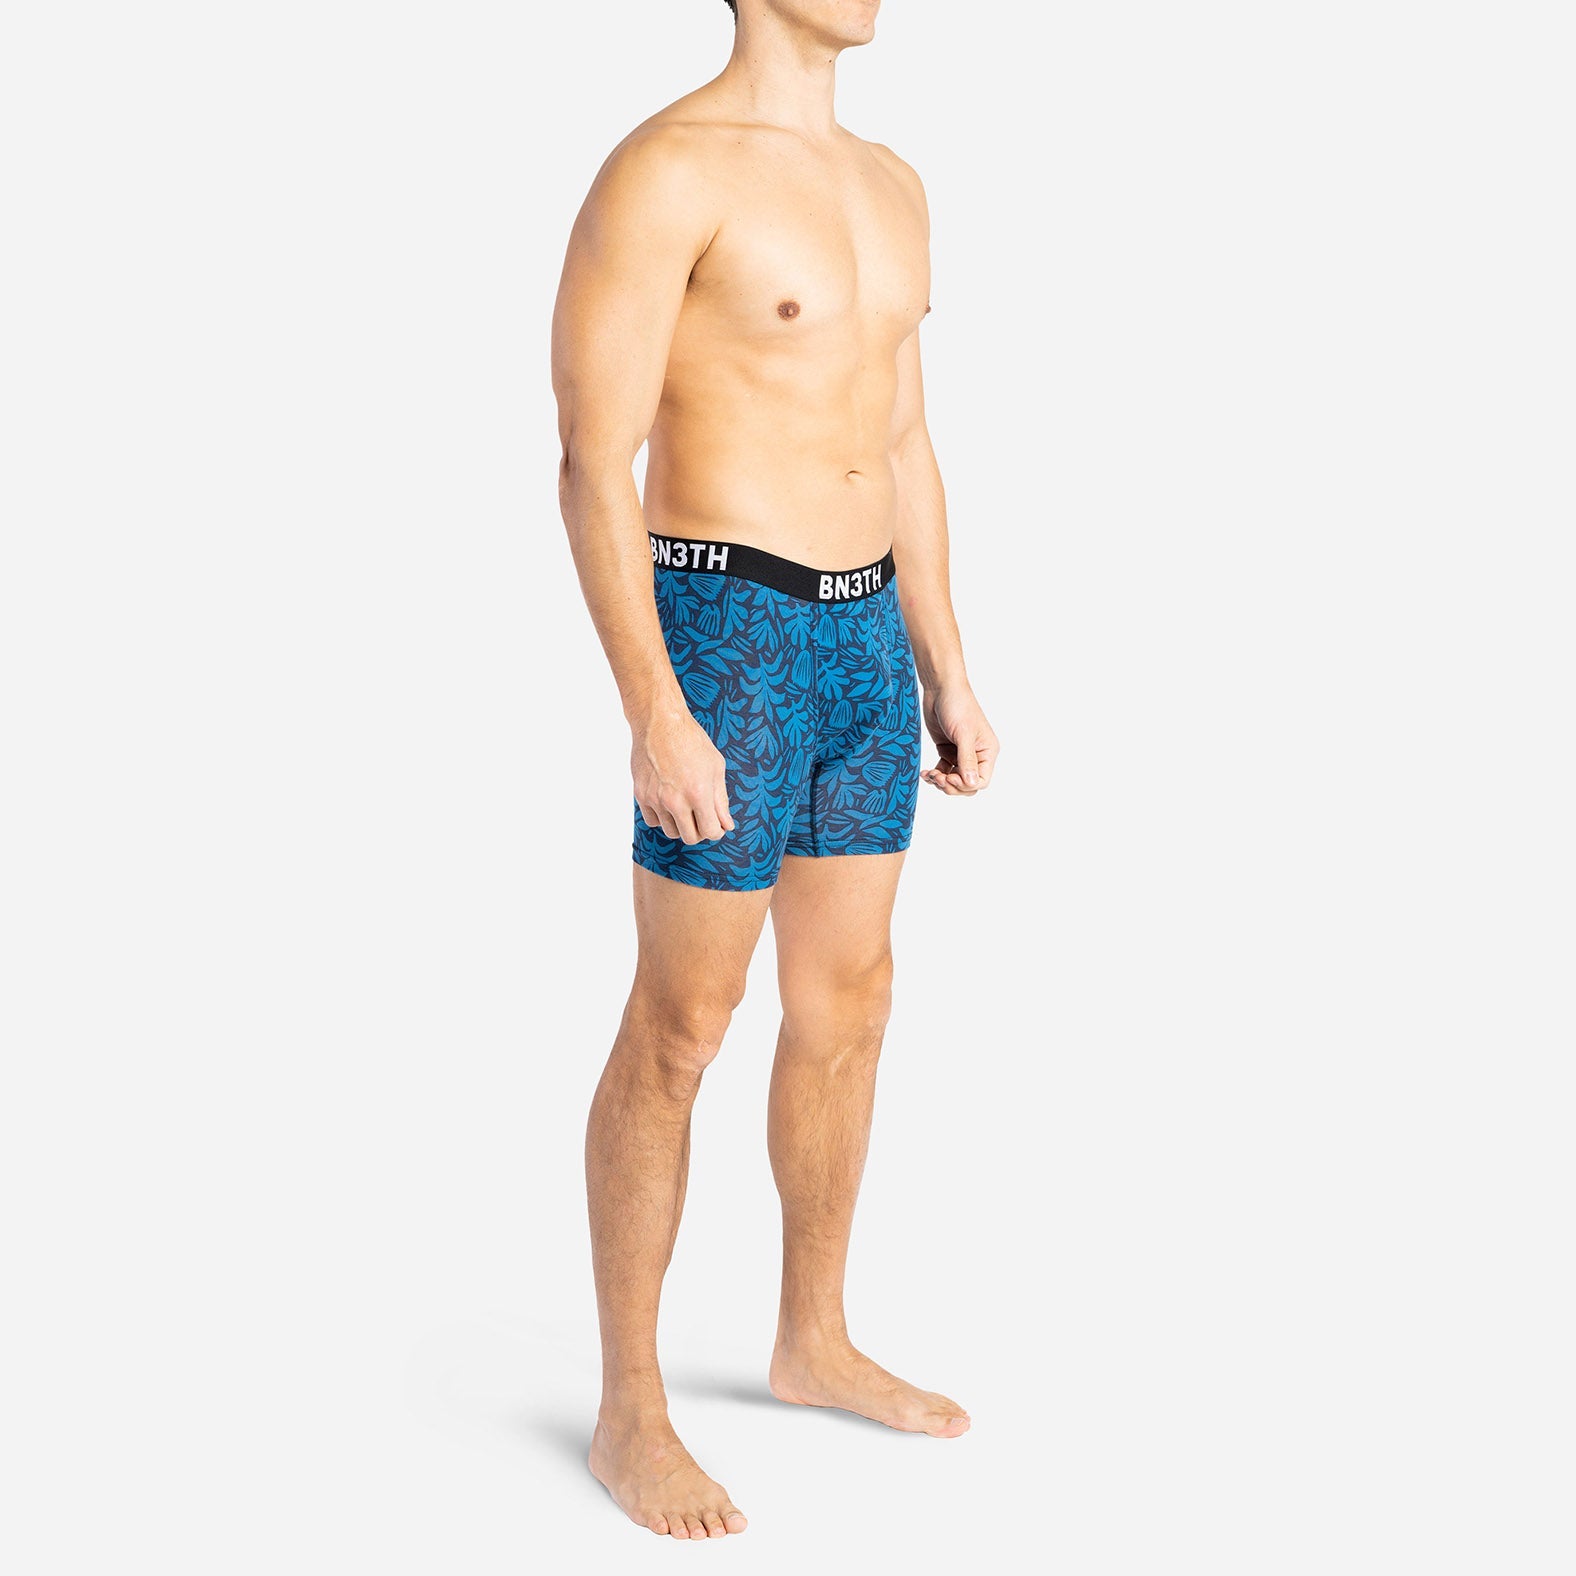 Outset Boxer Brief: Abstract Tropical Navy | BN3TH Underwear – BN3TH AU NZ